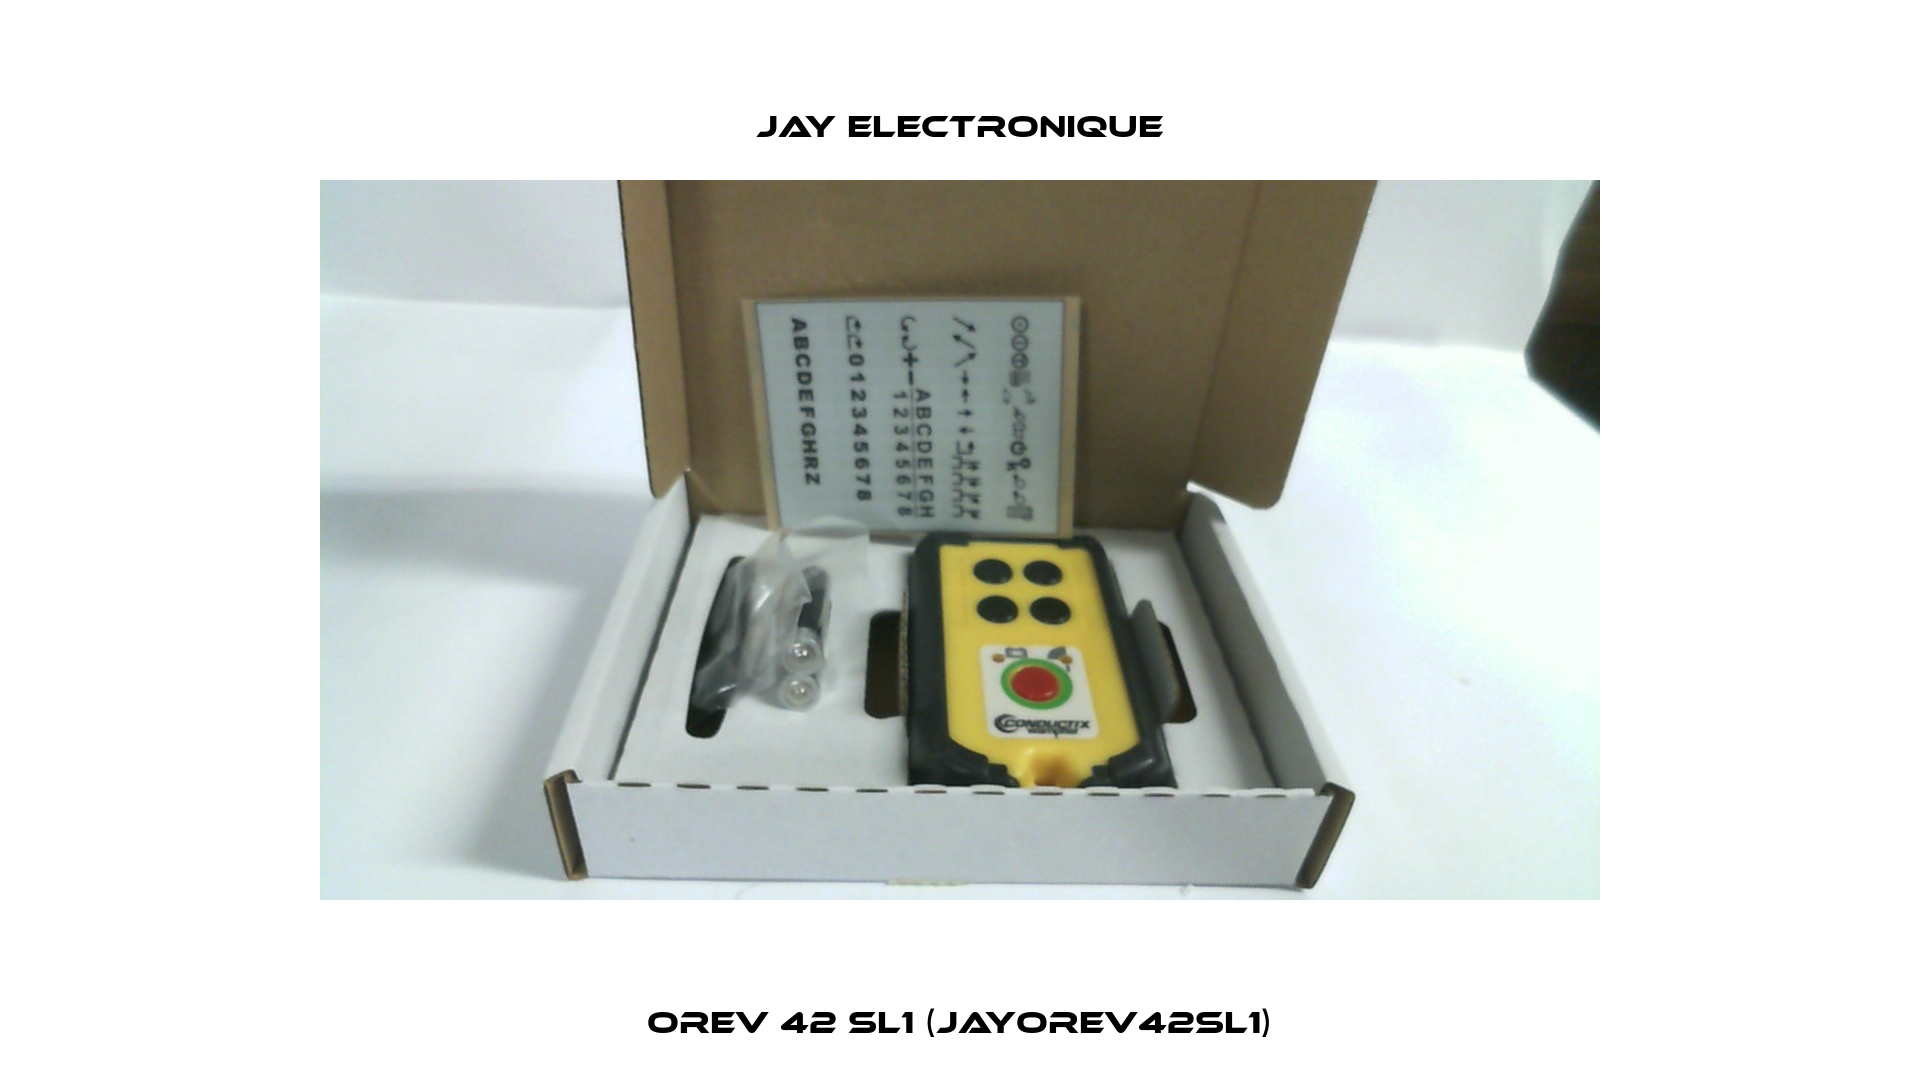 OREV 42 SL1 (JAYOREV42SL1) JAY Electronique